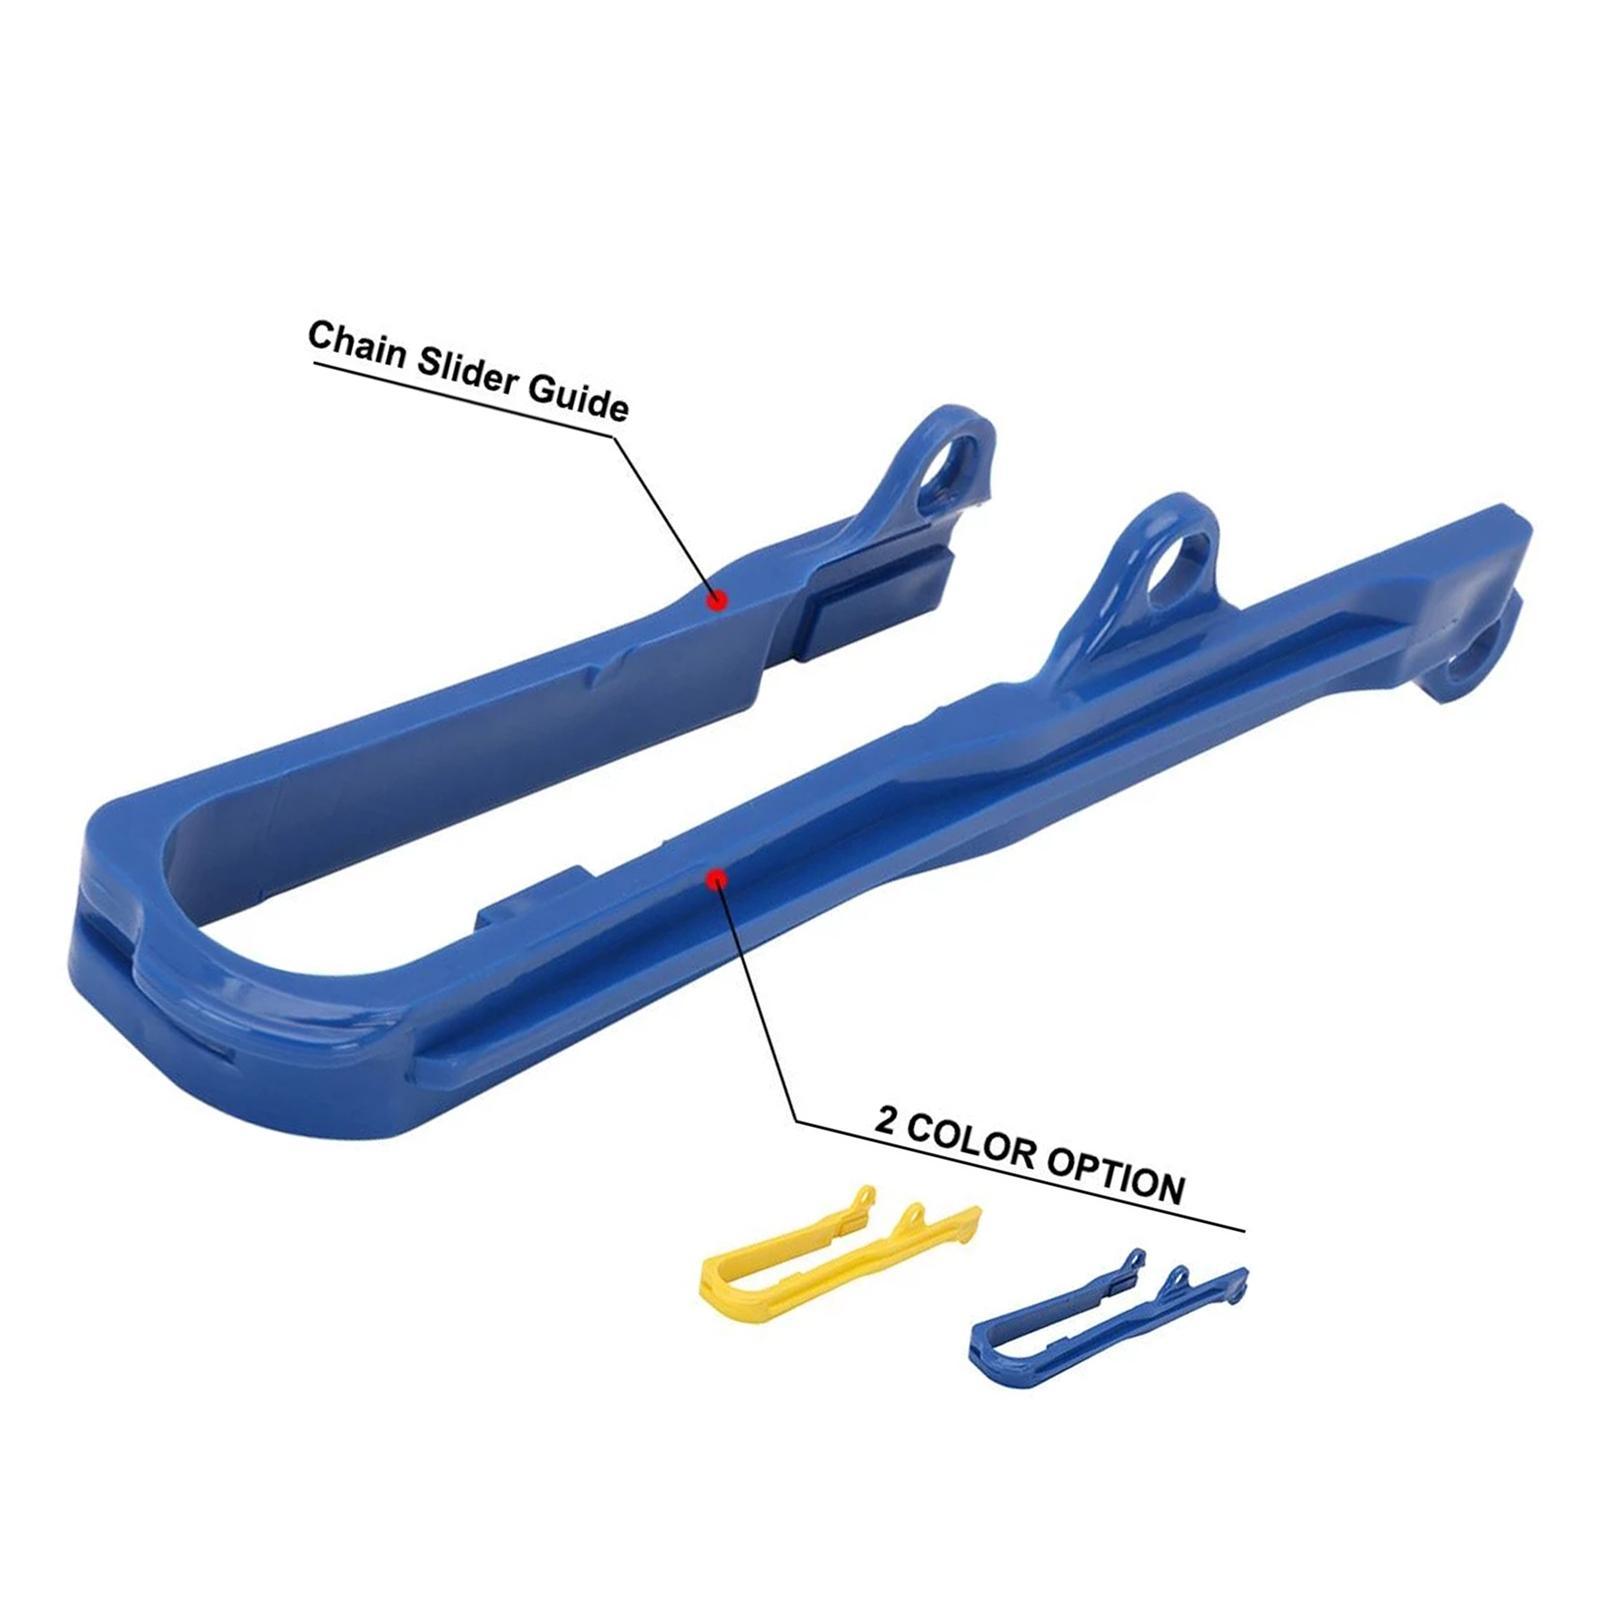 Chain Slider Swingarm Protector Plastic Spare Parts Fit for Suzuki Dr-Z400